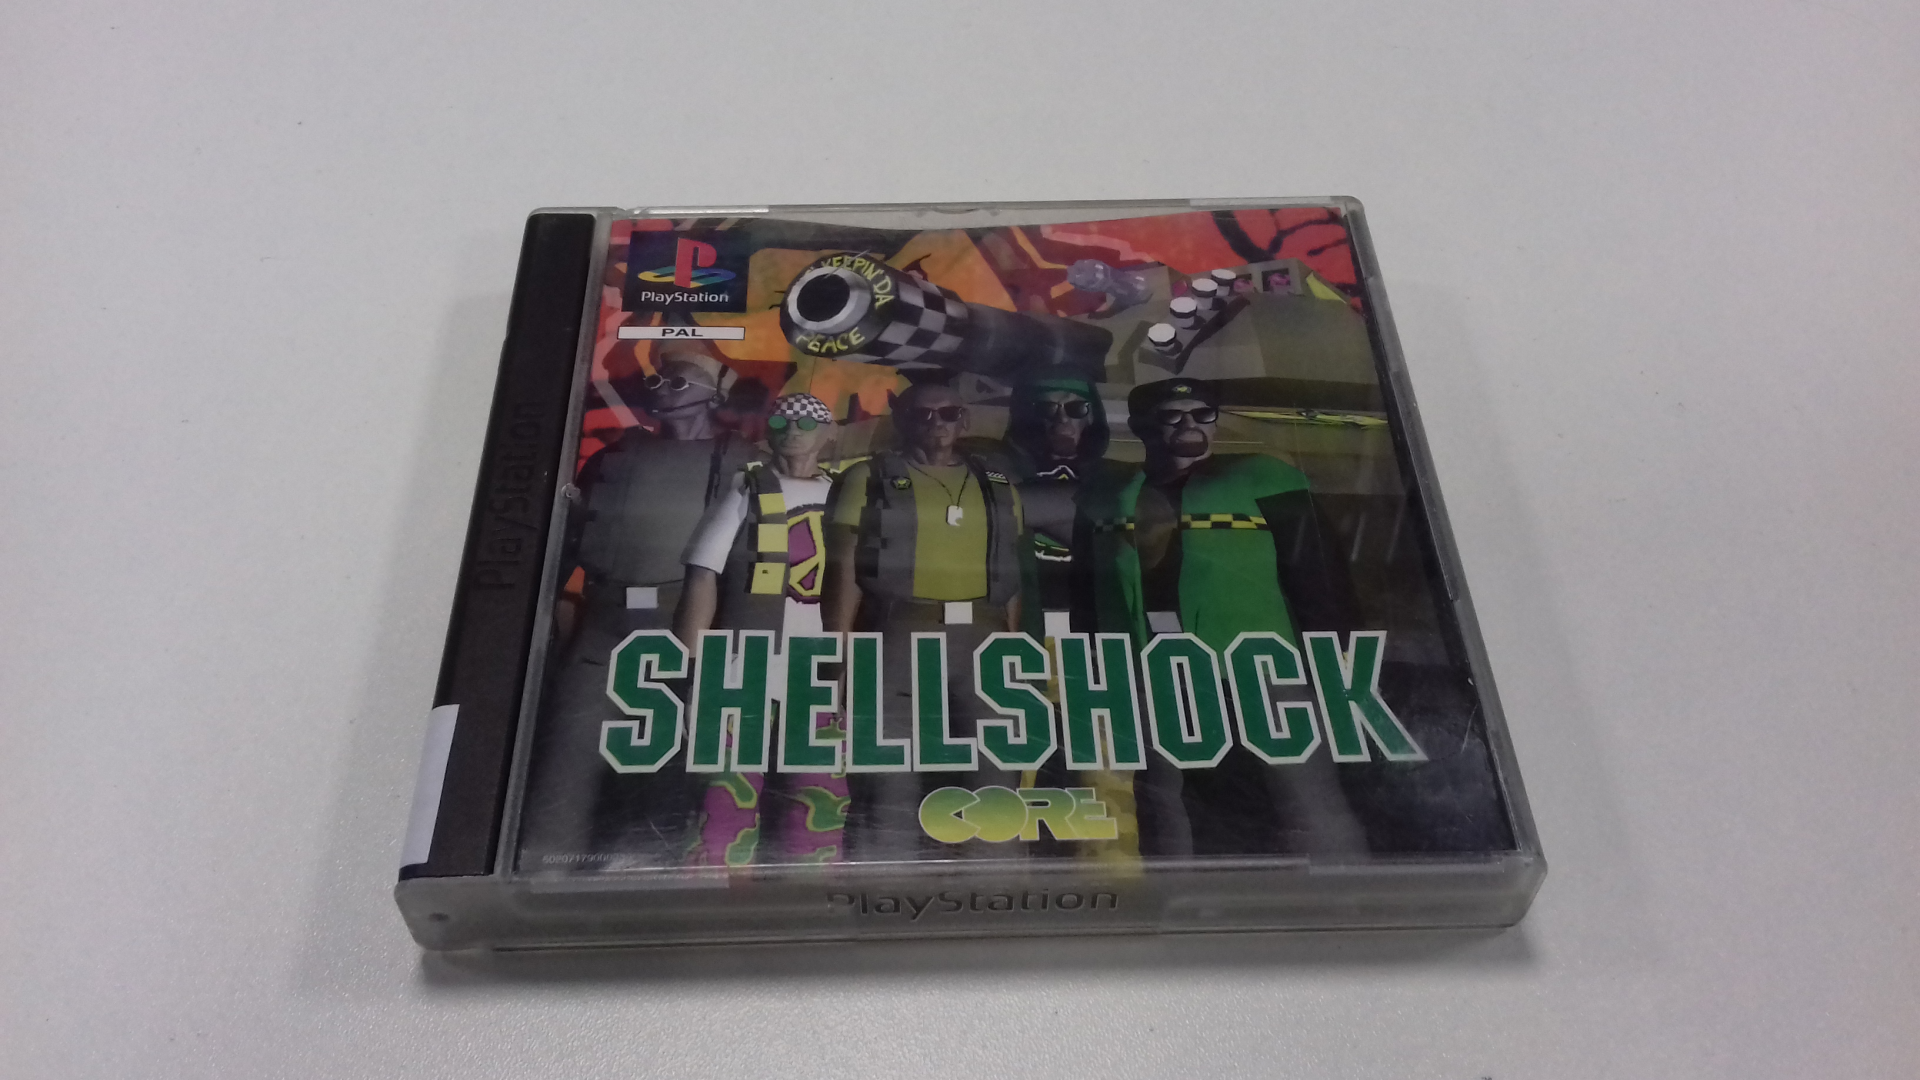 Shellshock - Gameplay PSX / PS1 / PS One / HD 720P (Epsxe) 